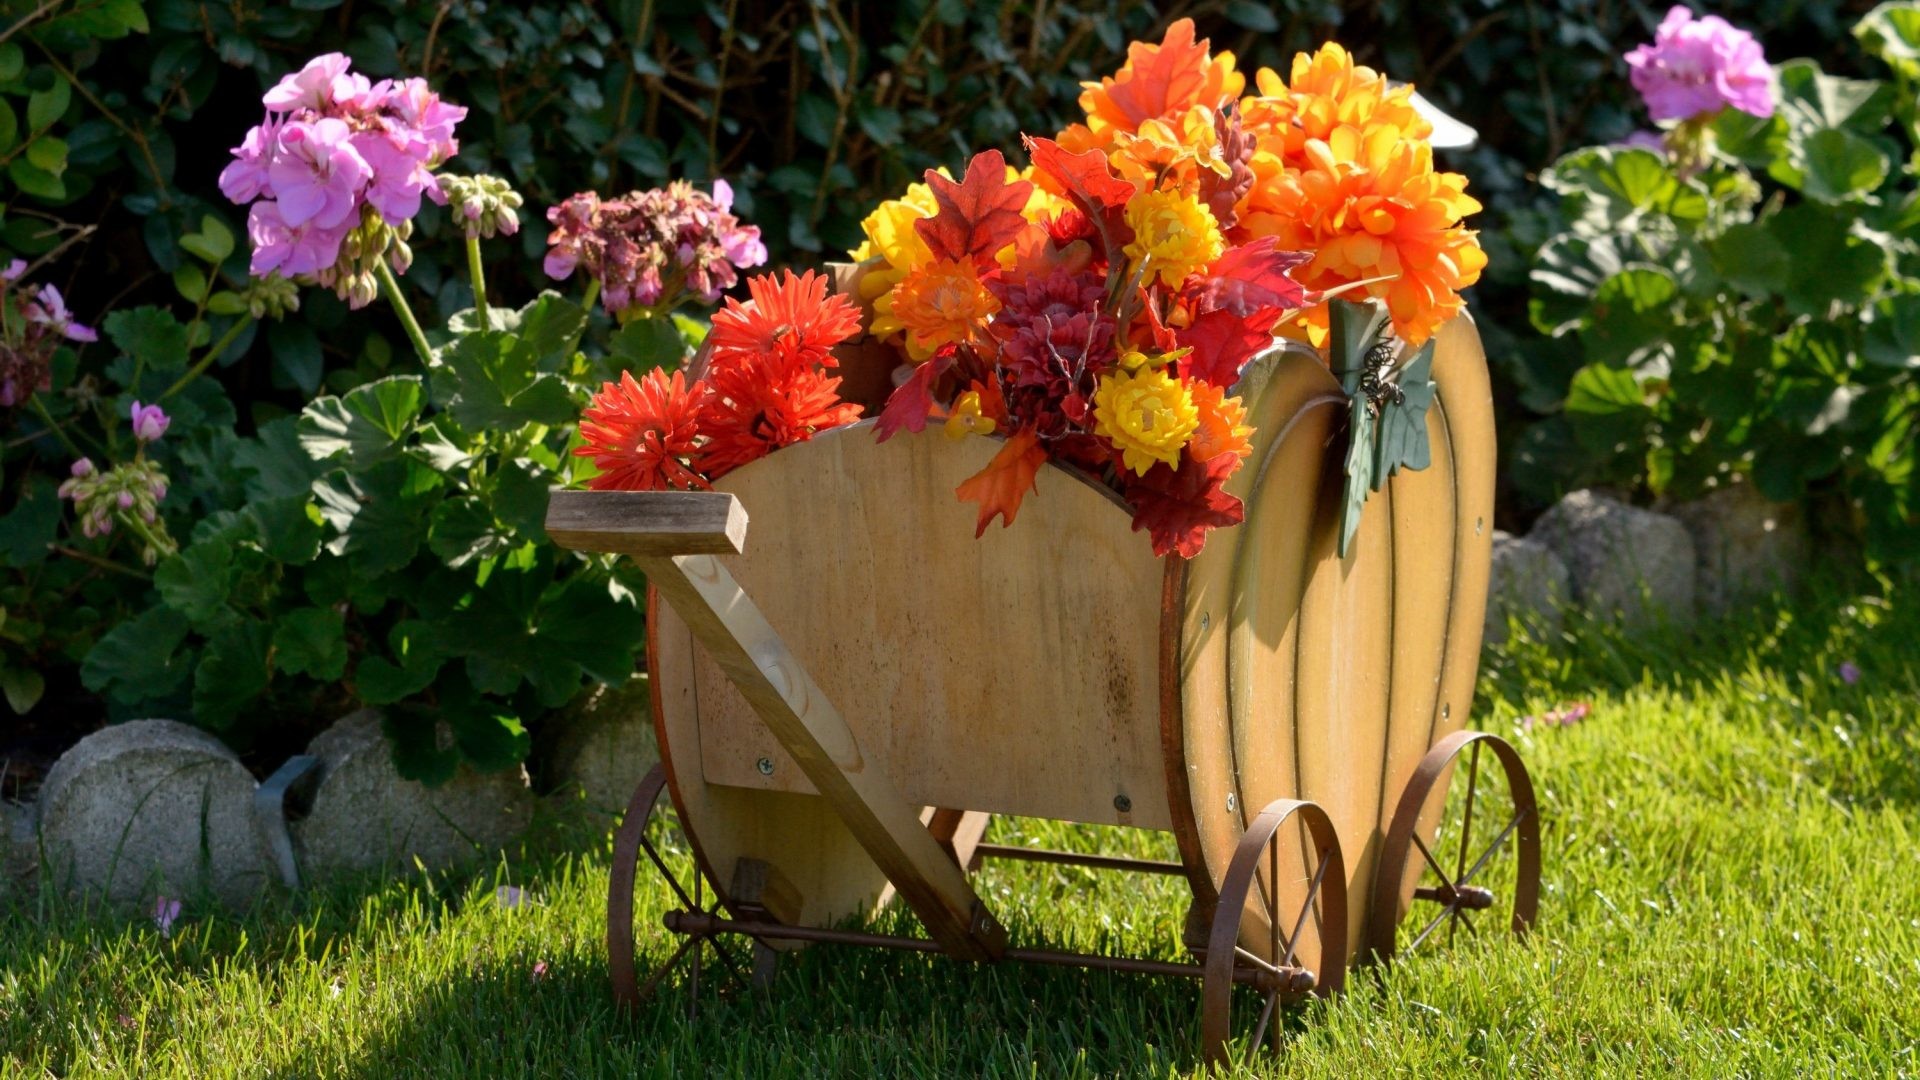 1920x1080 Harvest Tag - Festive Wagon Decor Harvest Autumn Flower Scene Desktop  Flowers Backgrounds for HD 16